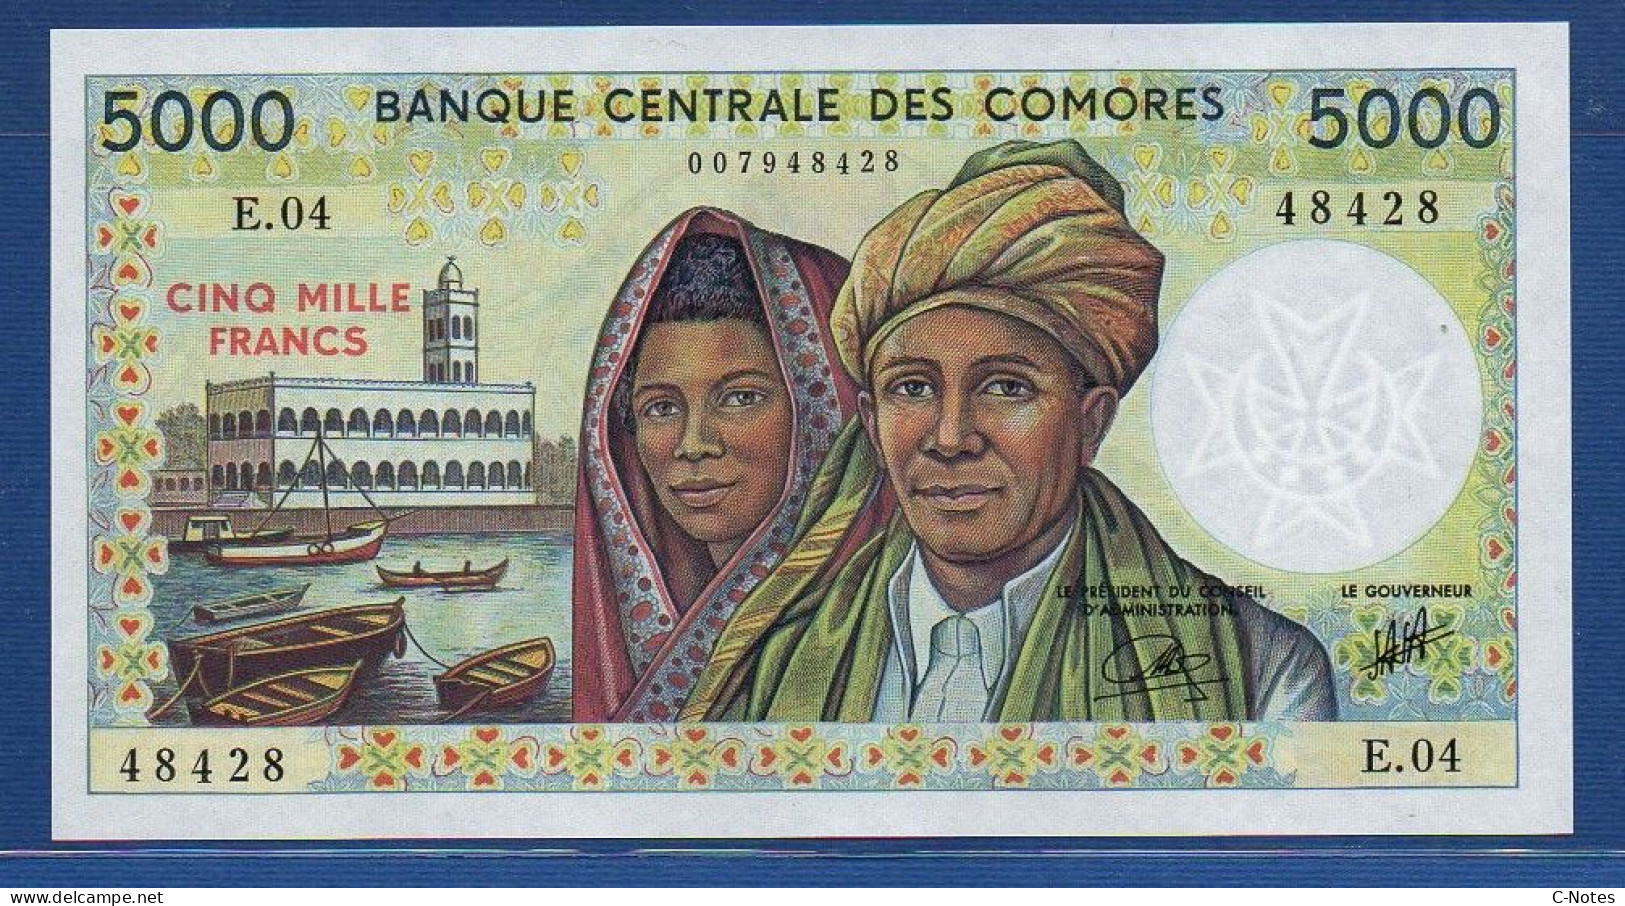 COMOROS - P.12b – 5000 Francs ND (1984 - 2005) UNC, S/n E.04 48428 - Komoren